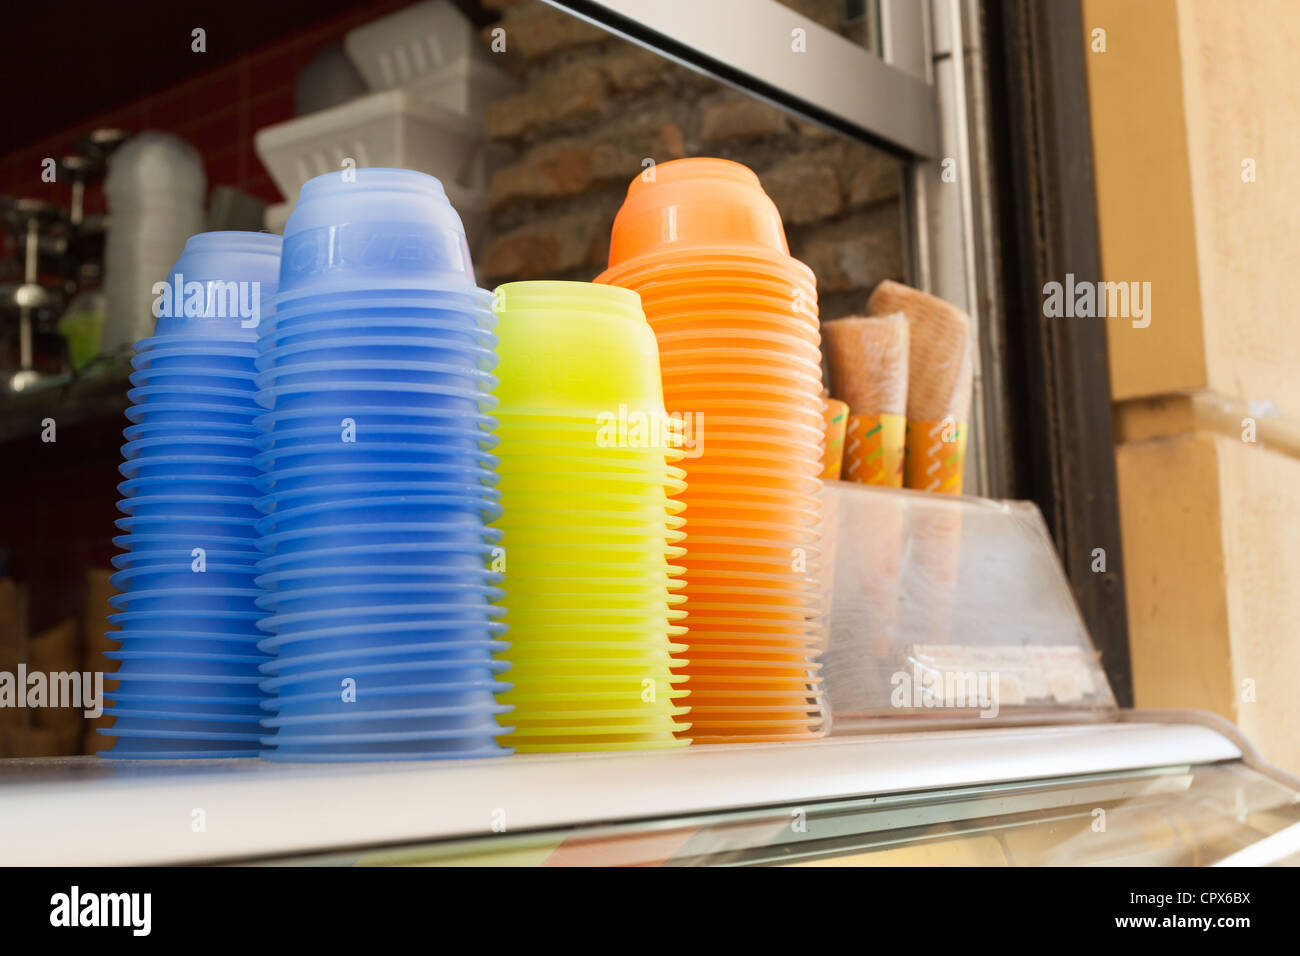 Ice cream tubs Malaga cafe. Spain Stock Photo